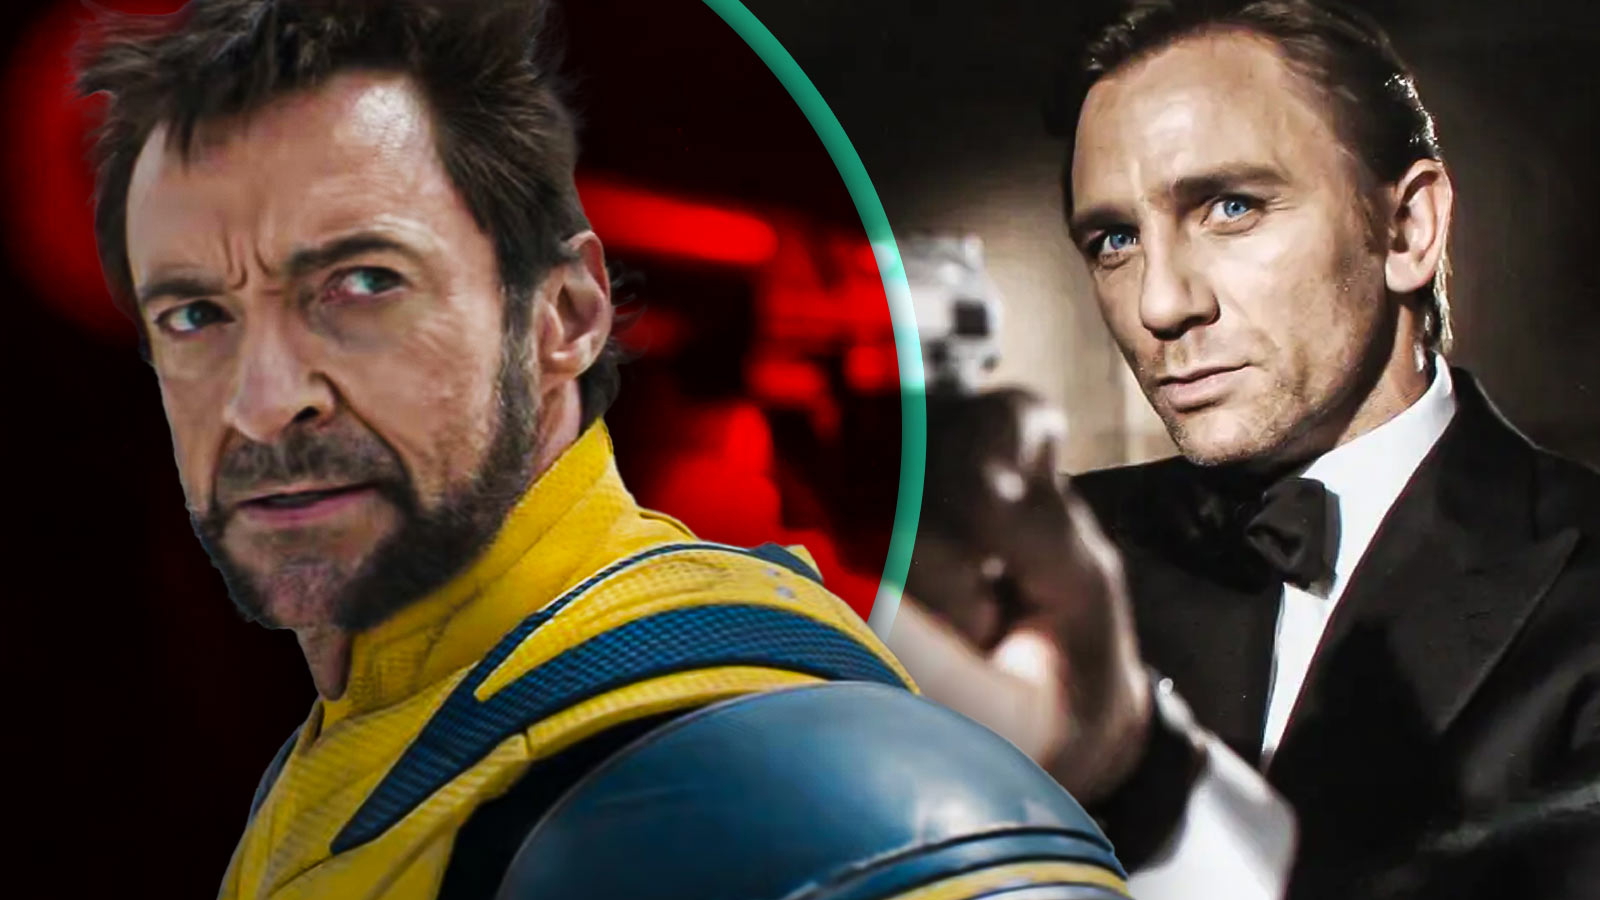 “Old Man Bond would go f**king crazy”: Forget Hugh Jackman in ‘Deadpool & Wolverine’, 1 Former 007 Actor Finds Major Support Among Further Casting Delays